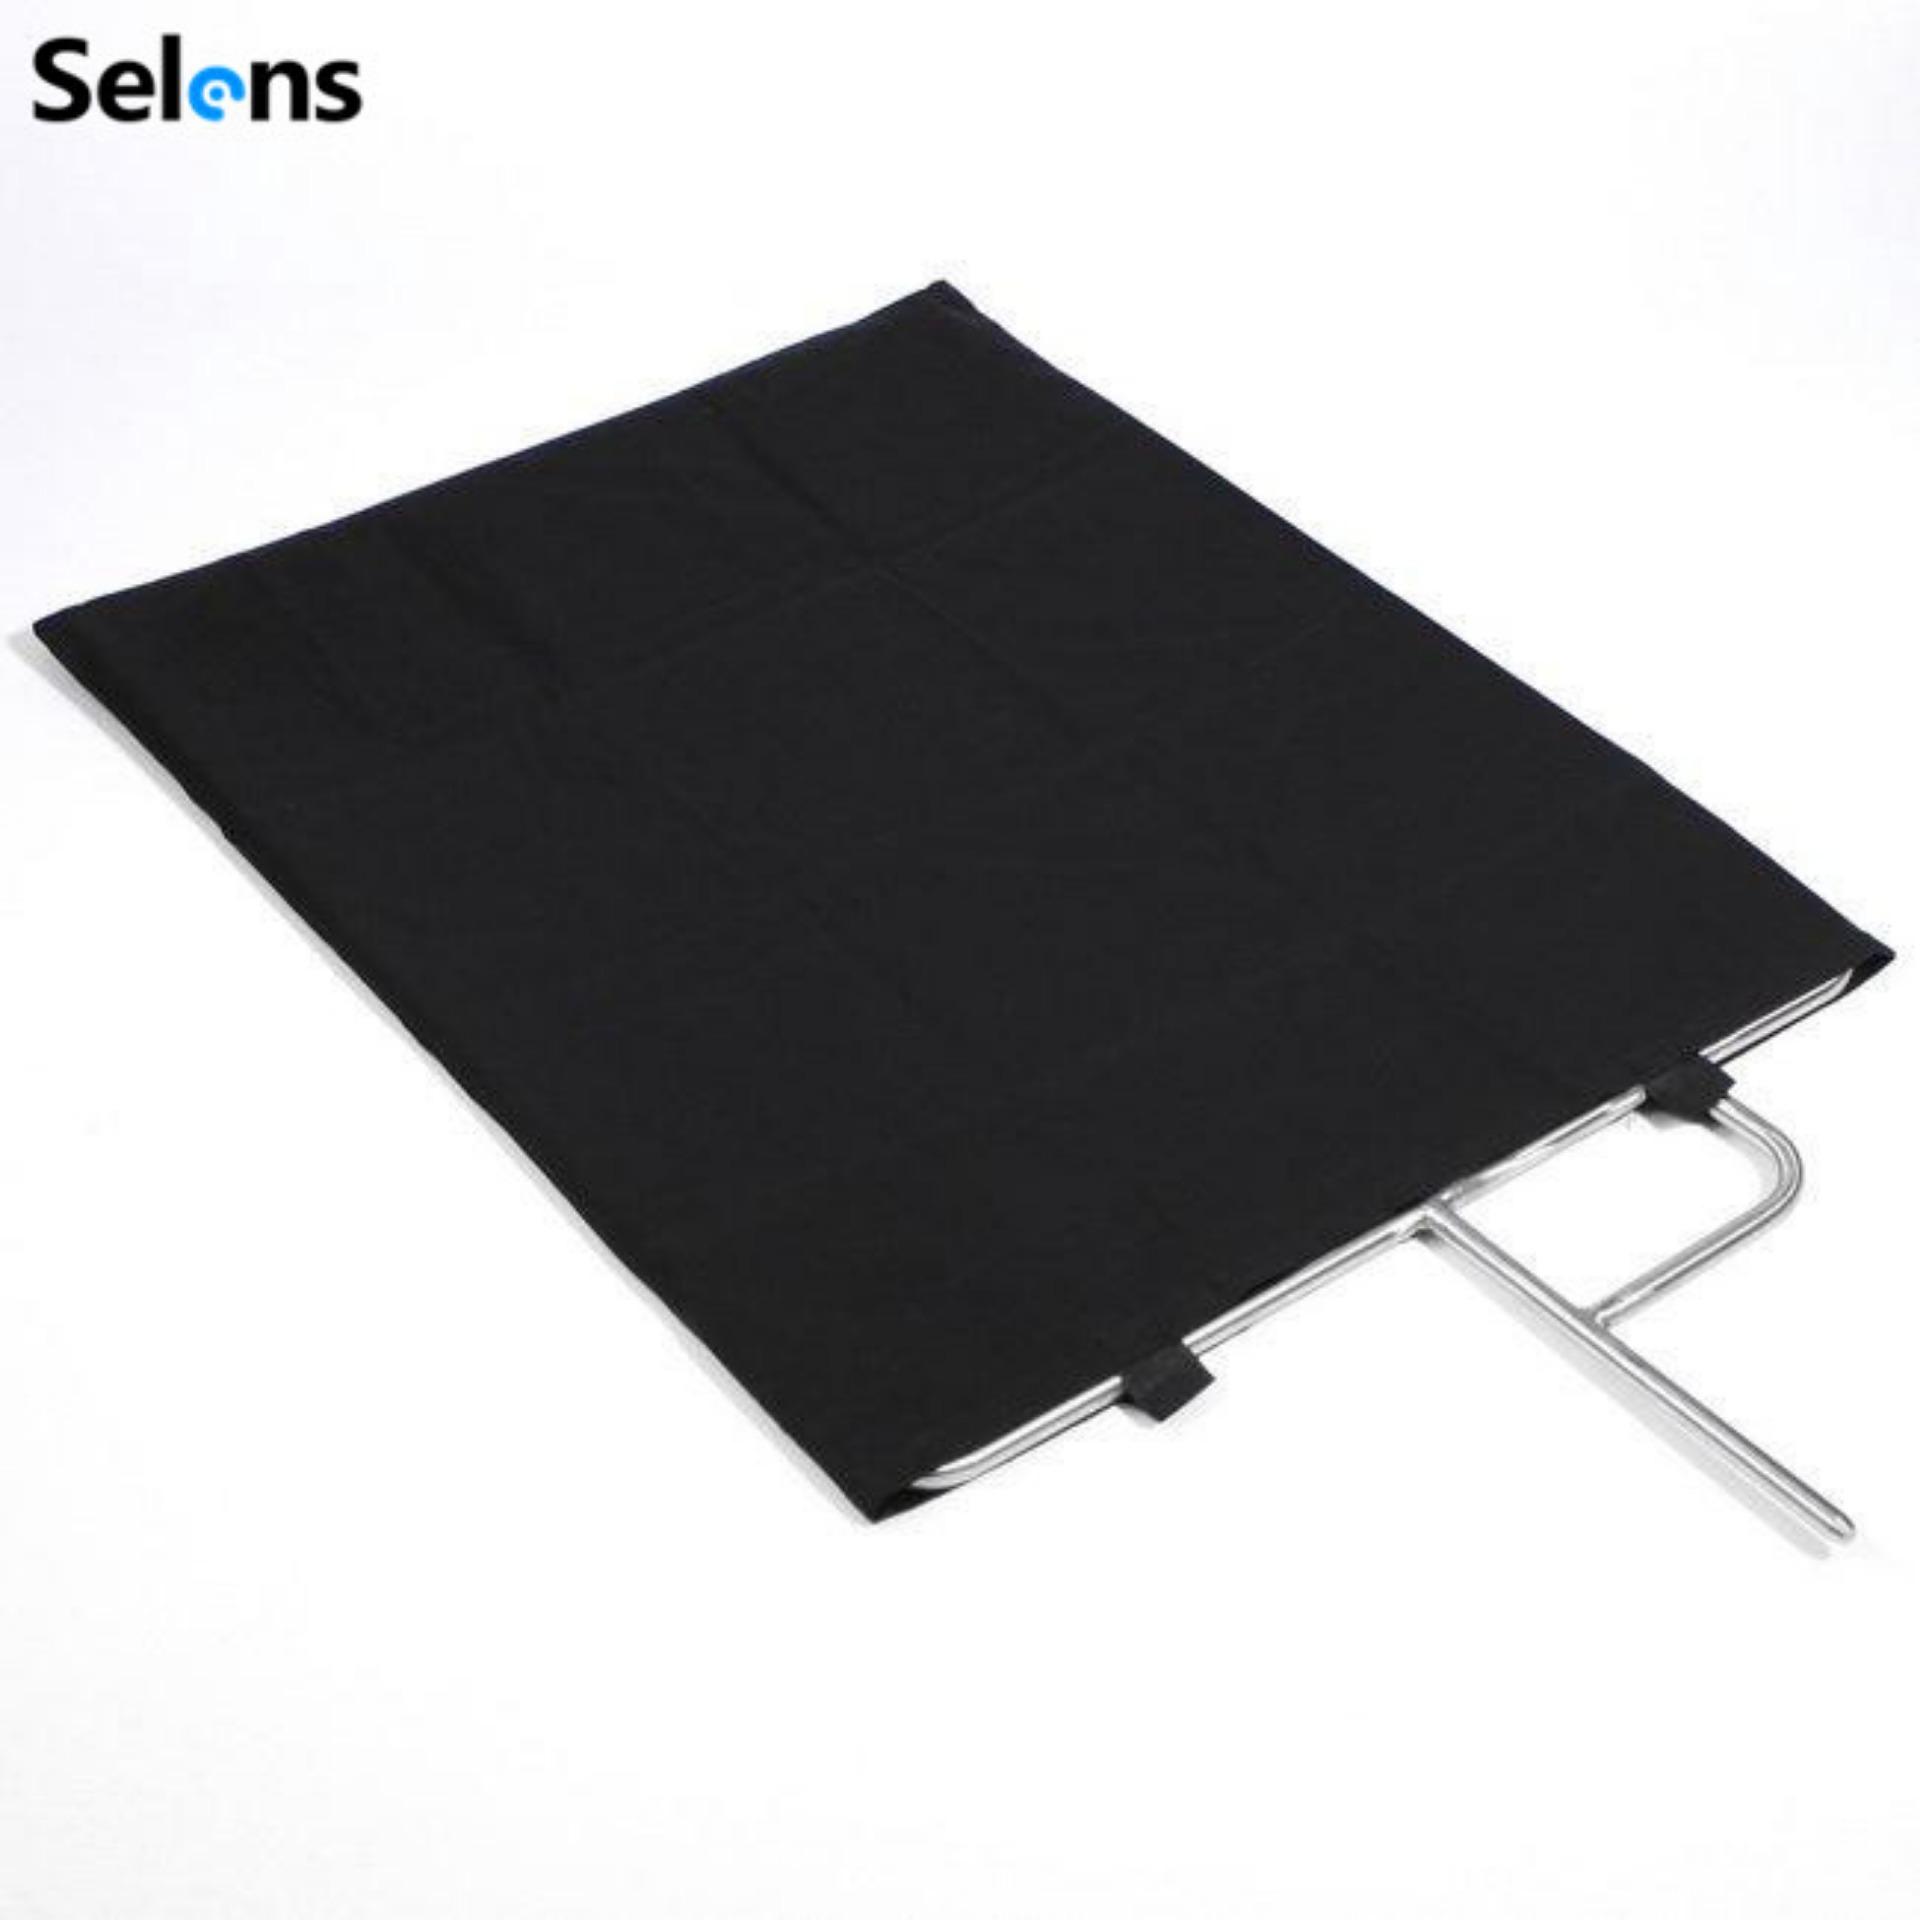 Selens  แผงสแตนเลส สำหรับใส่แผ่นสะท้อนแสง ขนาด 60x75 cm. + Diffuser + ผ้าสีดำสำหรับสตูดิโอ อุปกรณ์เสริมสำหรับสตูดิโอถ่ายภาพ